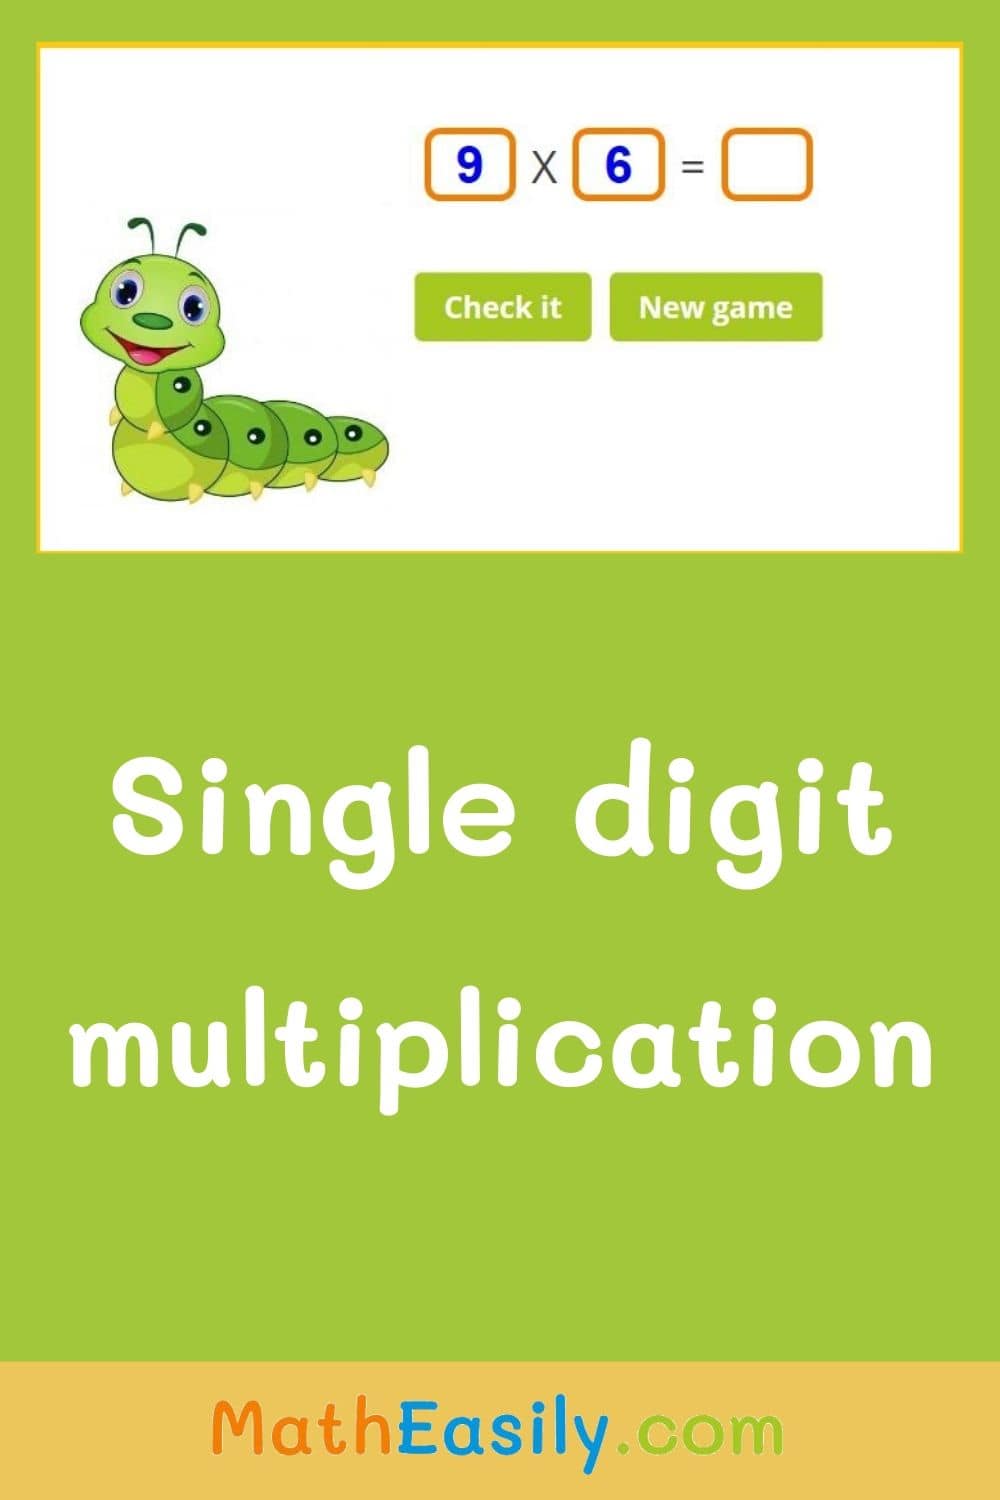 single digit by Single digit multiplication games. Single digit multiplication practice online. multiply single digit numbers.
multiplication one digit. multiplication 1 digit by 1 digit. multiplication by single digit.